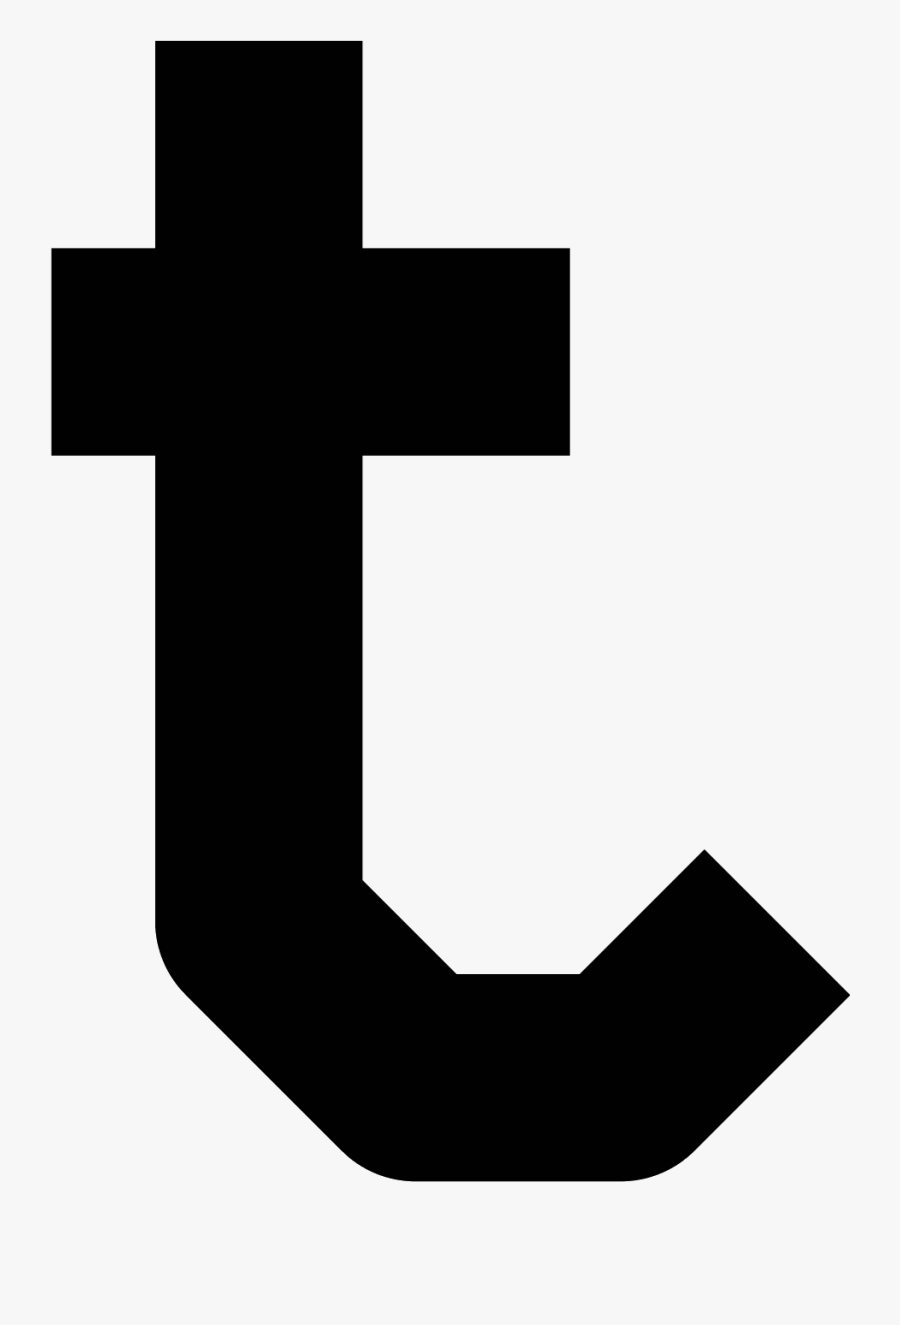 T Letter Png File Download Free - Left Up Arrow Symbol, Transparent Clipart